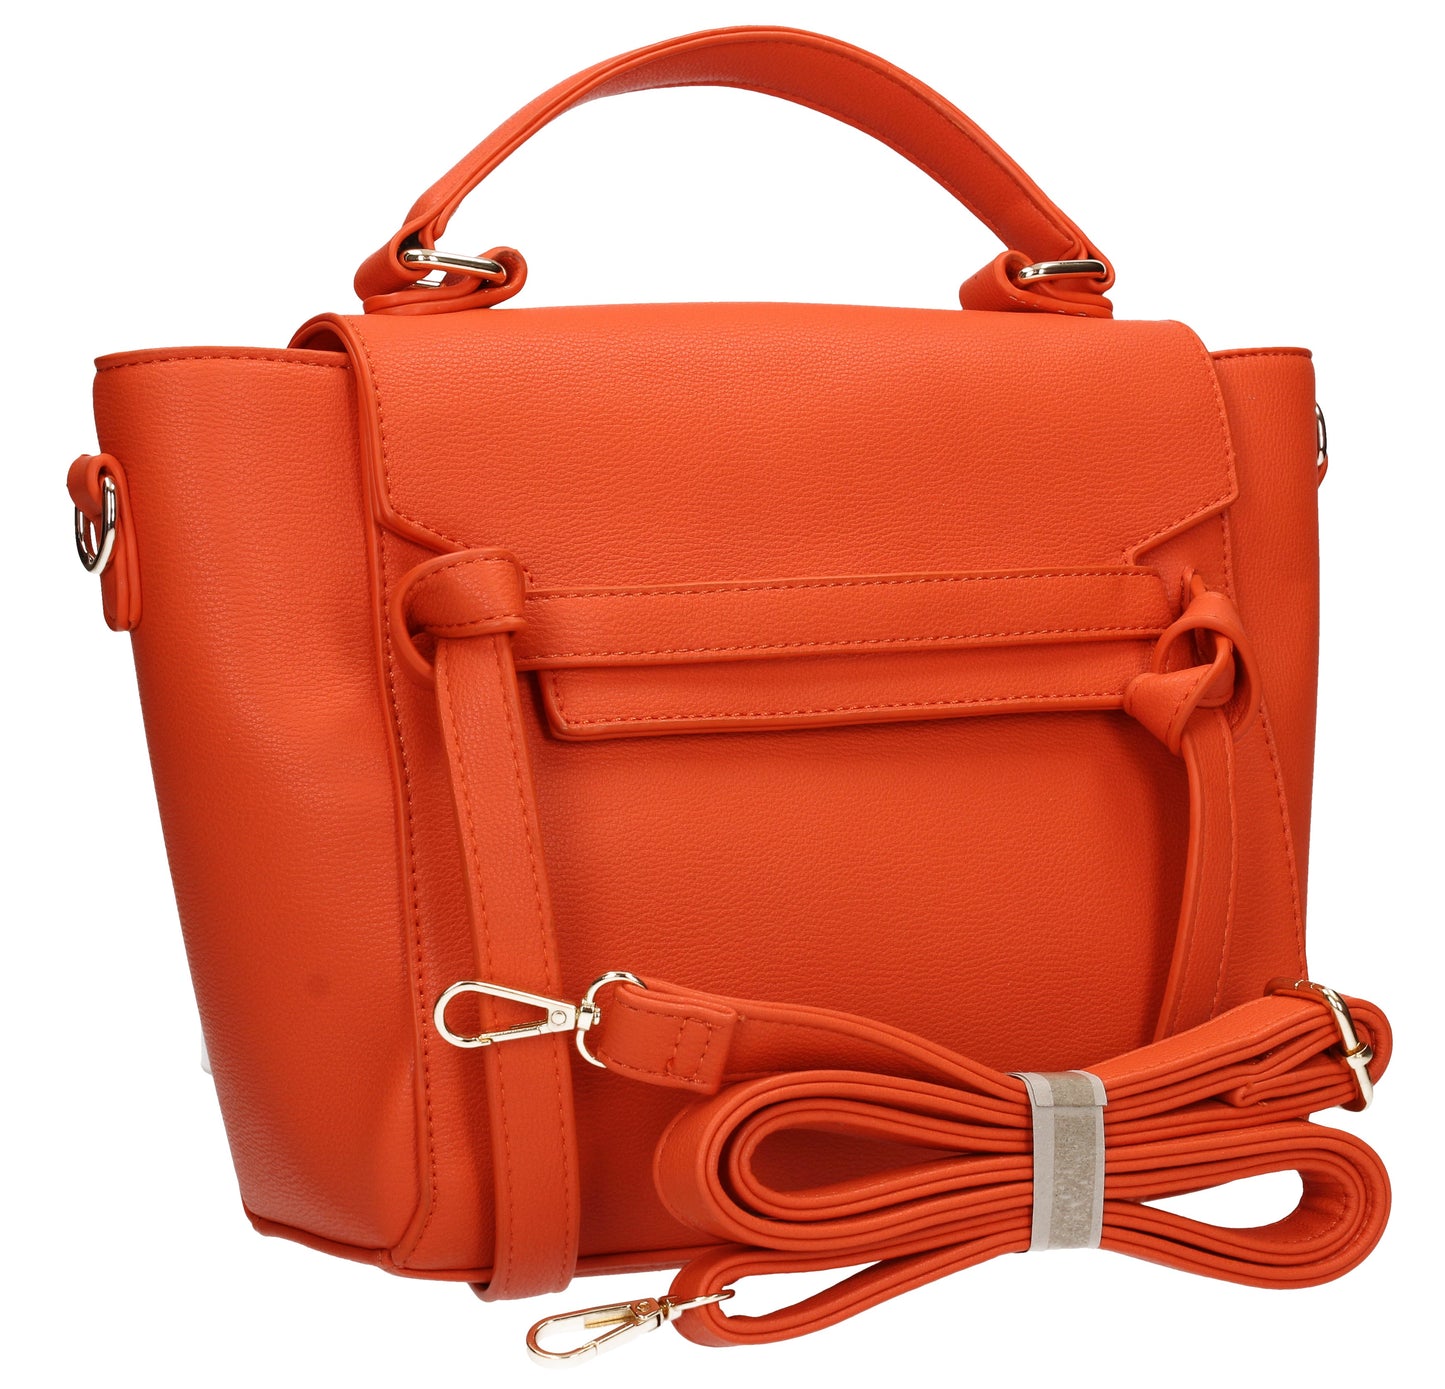 Buy your Juana Handbag Orange Today! Buy with confidence from Swankyswans